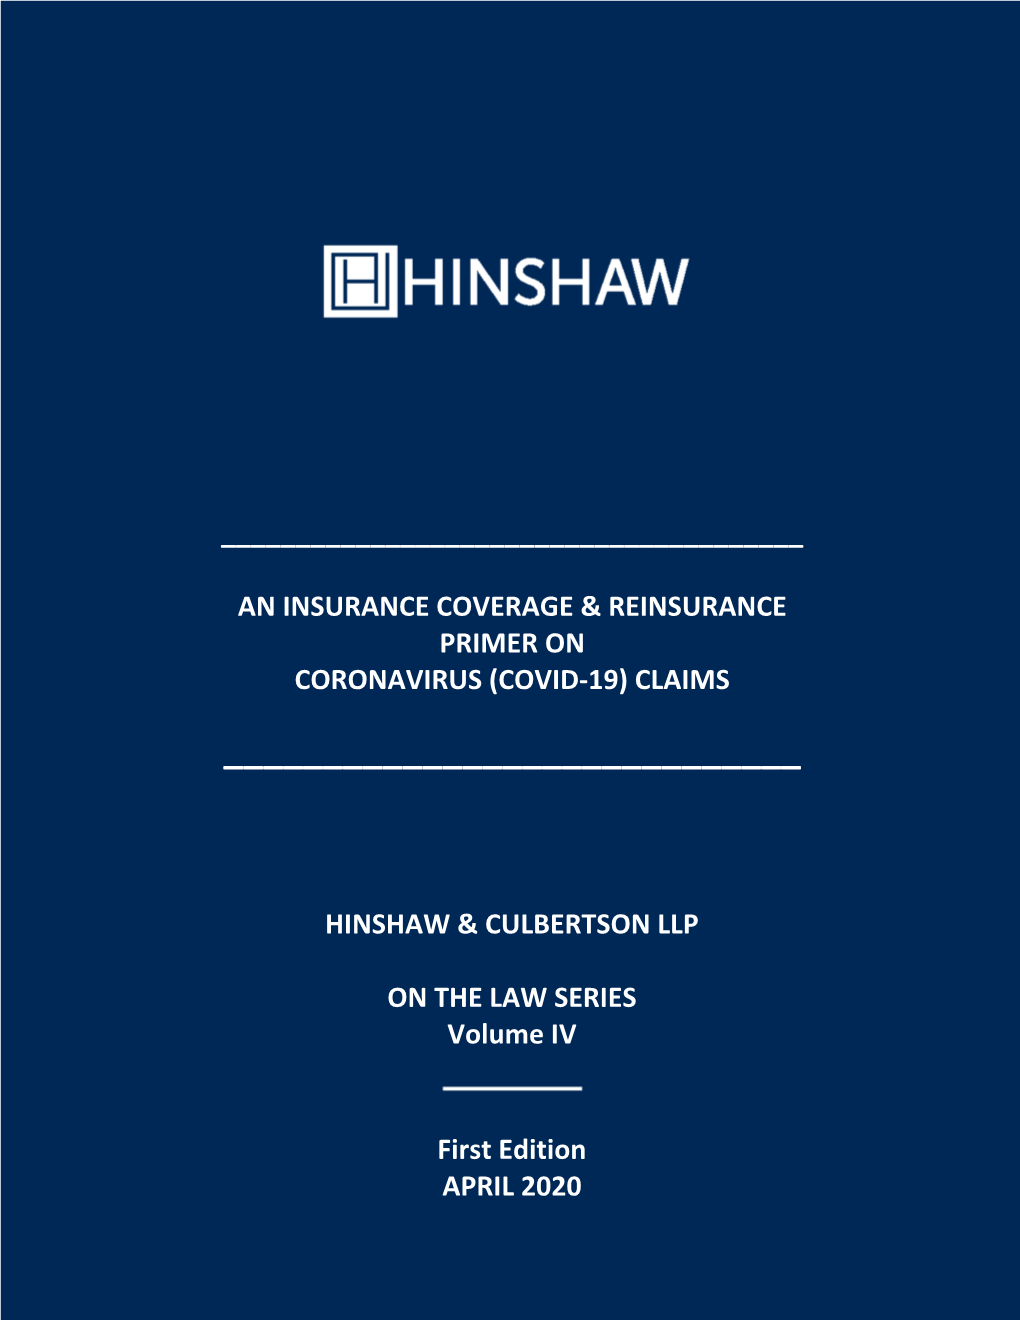 An Insurance Coverage & Reinsurance Primer on Coronavirus (Covid-19) Claims